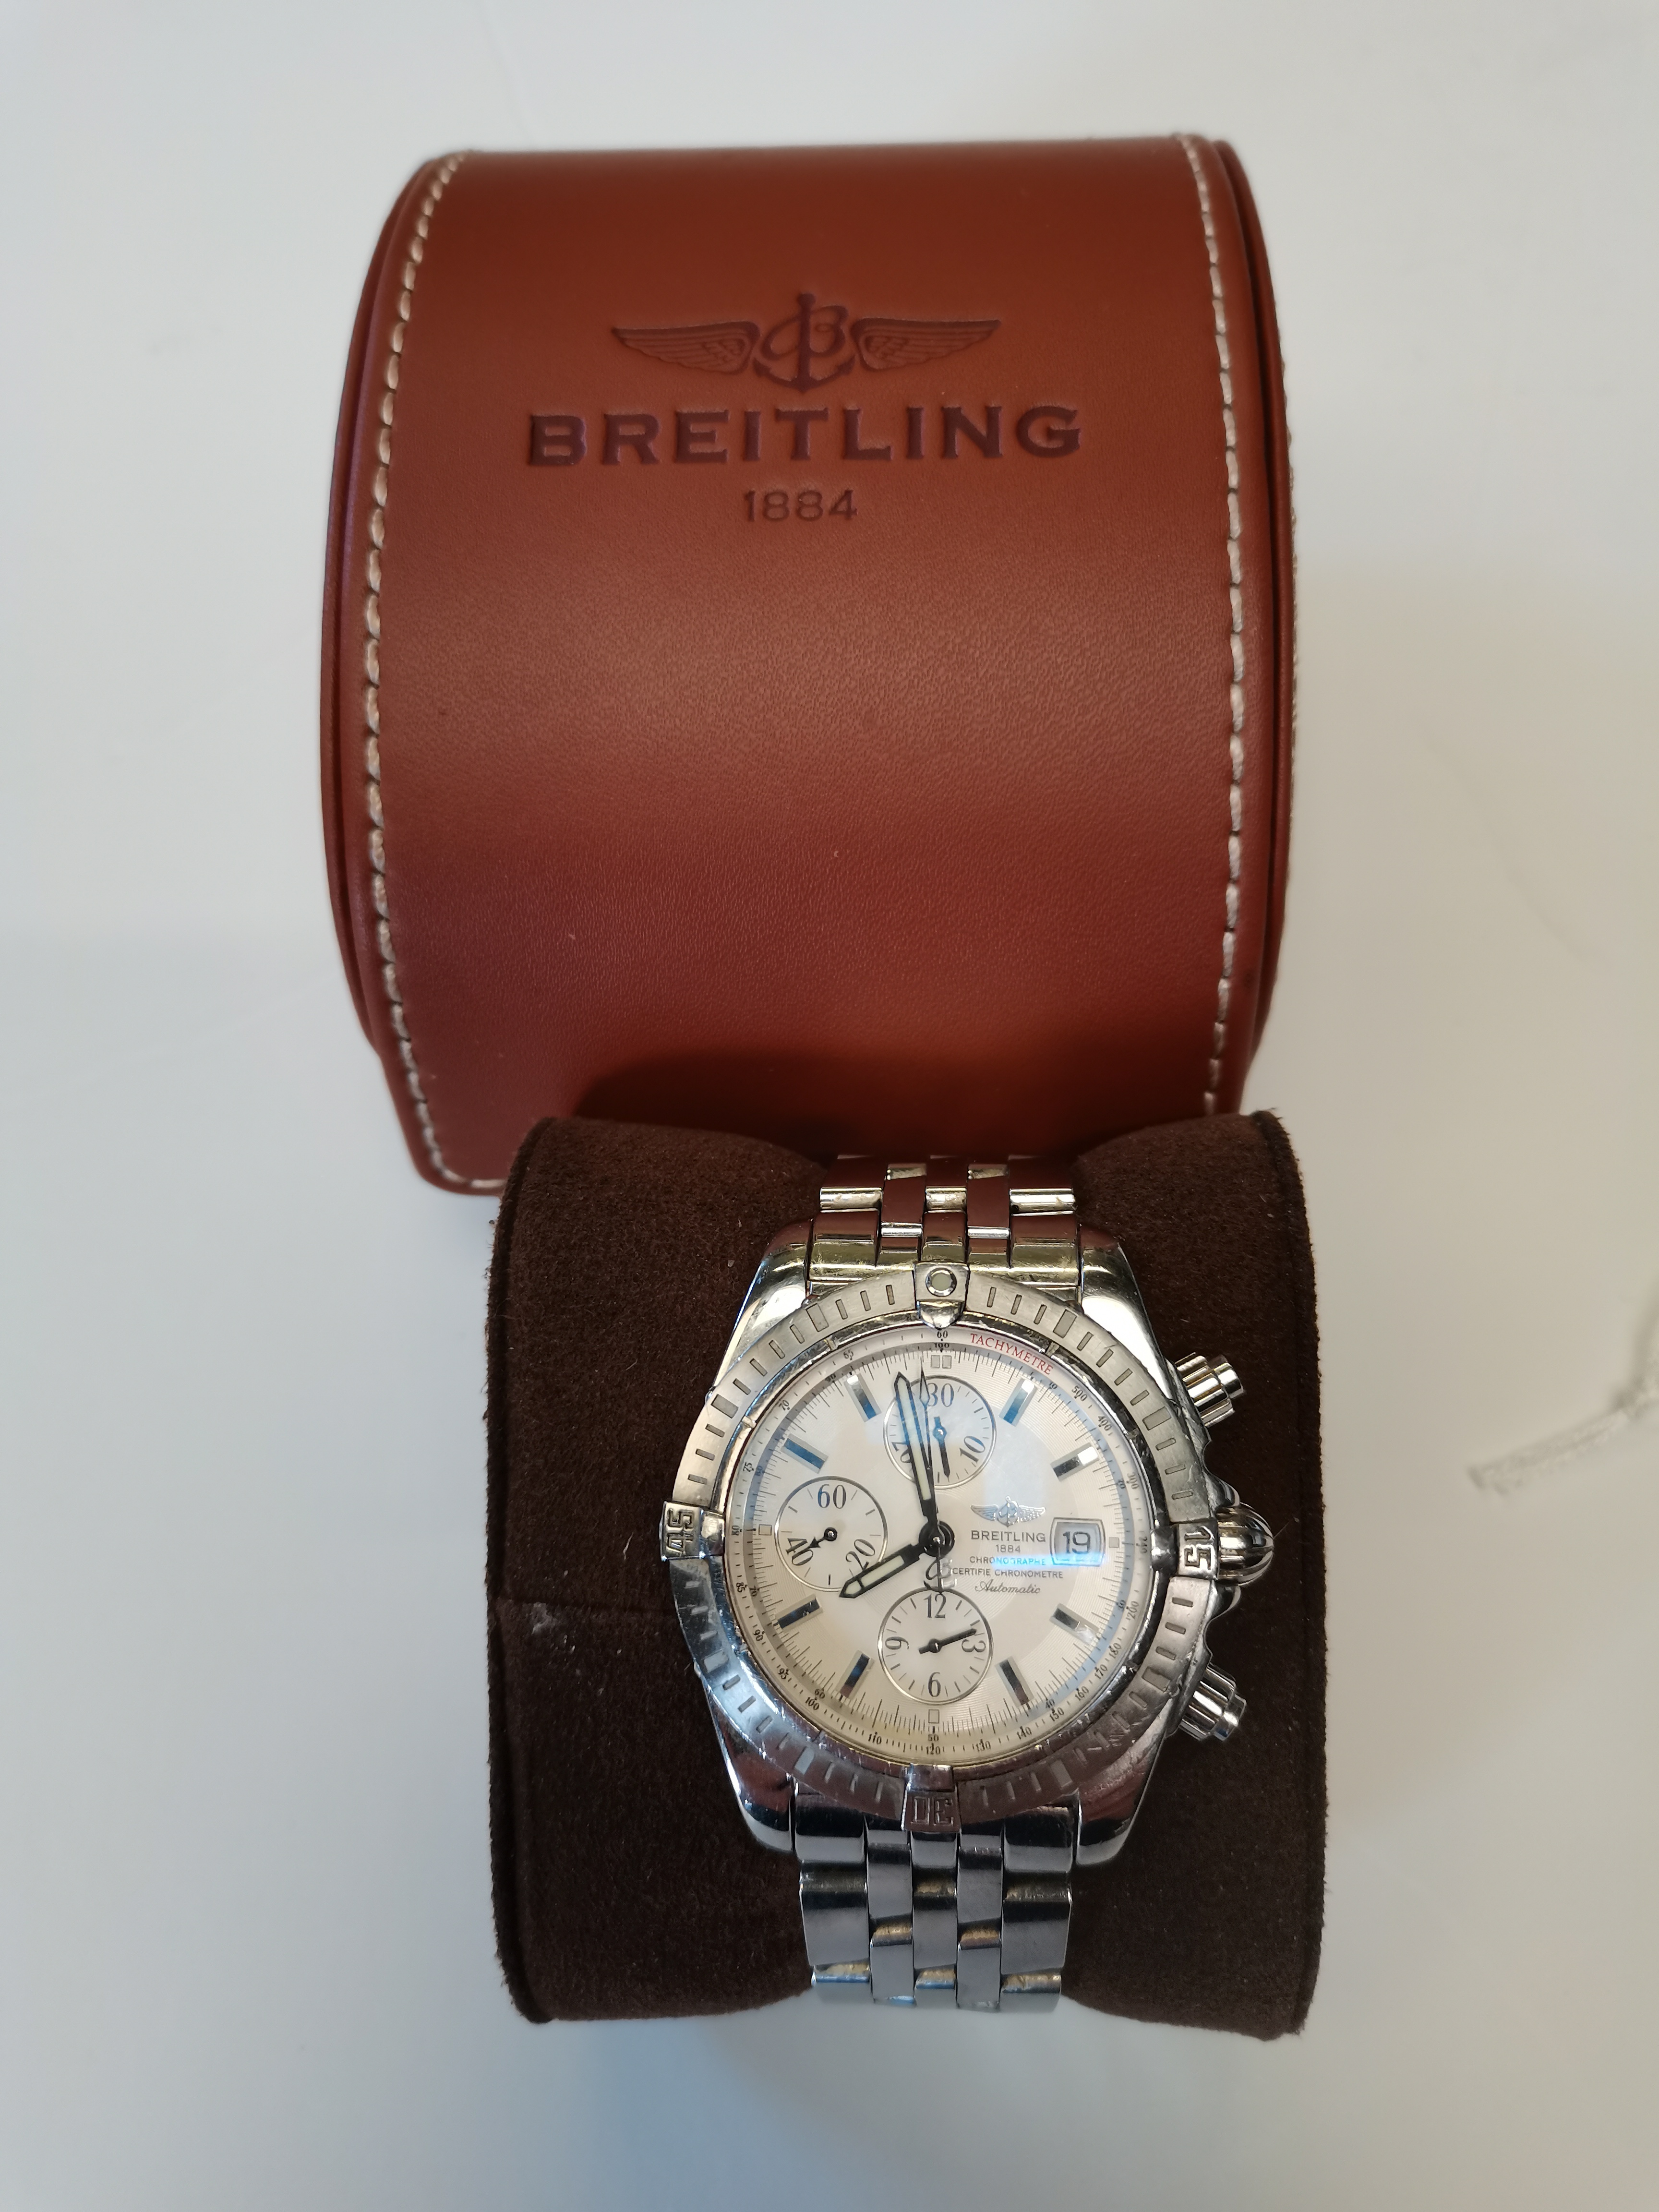 Breitling Chronometer automatic in original box - Image 3 of 11